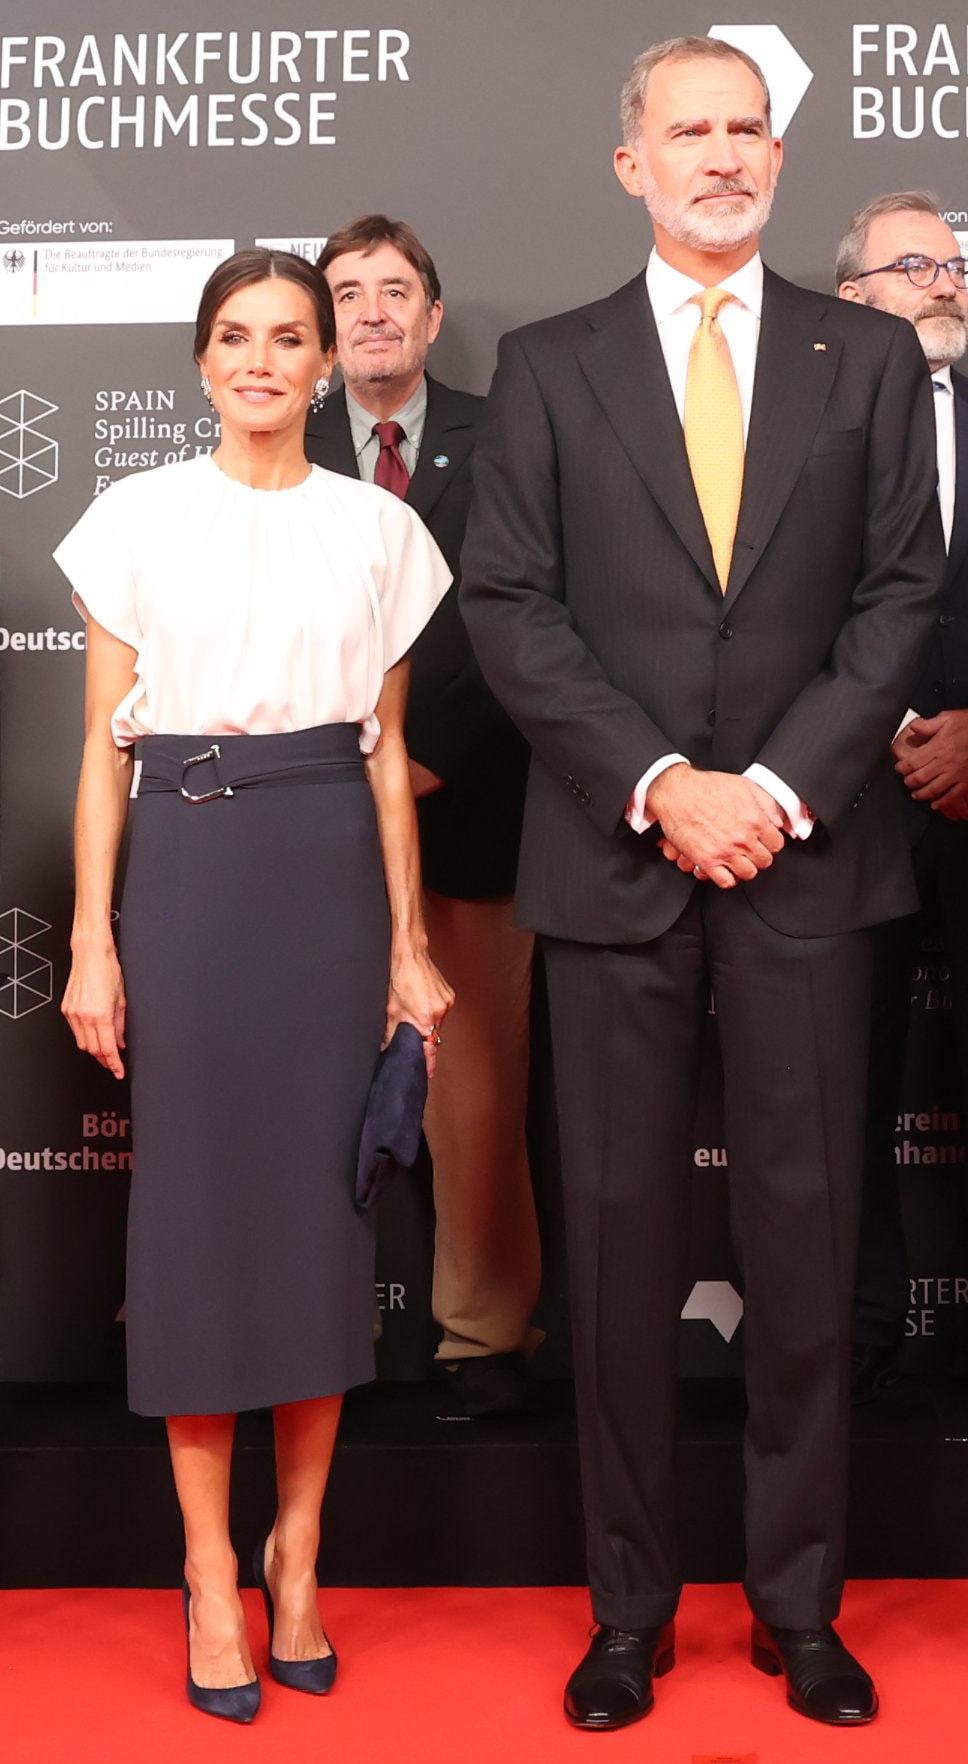 King Felipe VI and Queen Letizia inaugurate the Frankfurt Book Fair on 18 October 2022